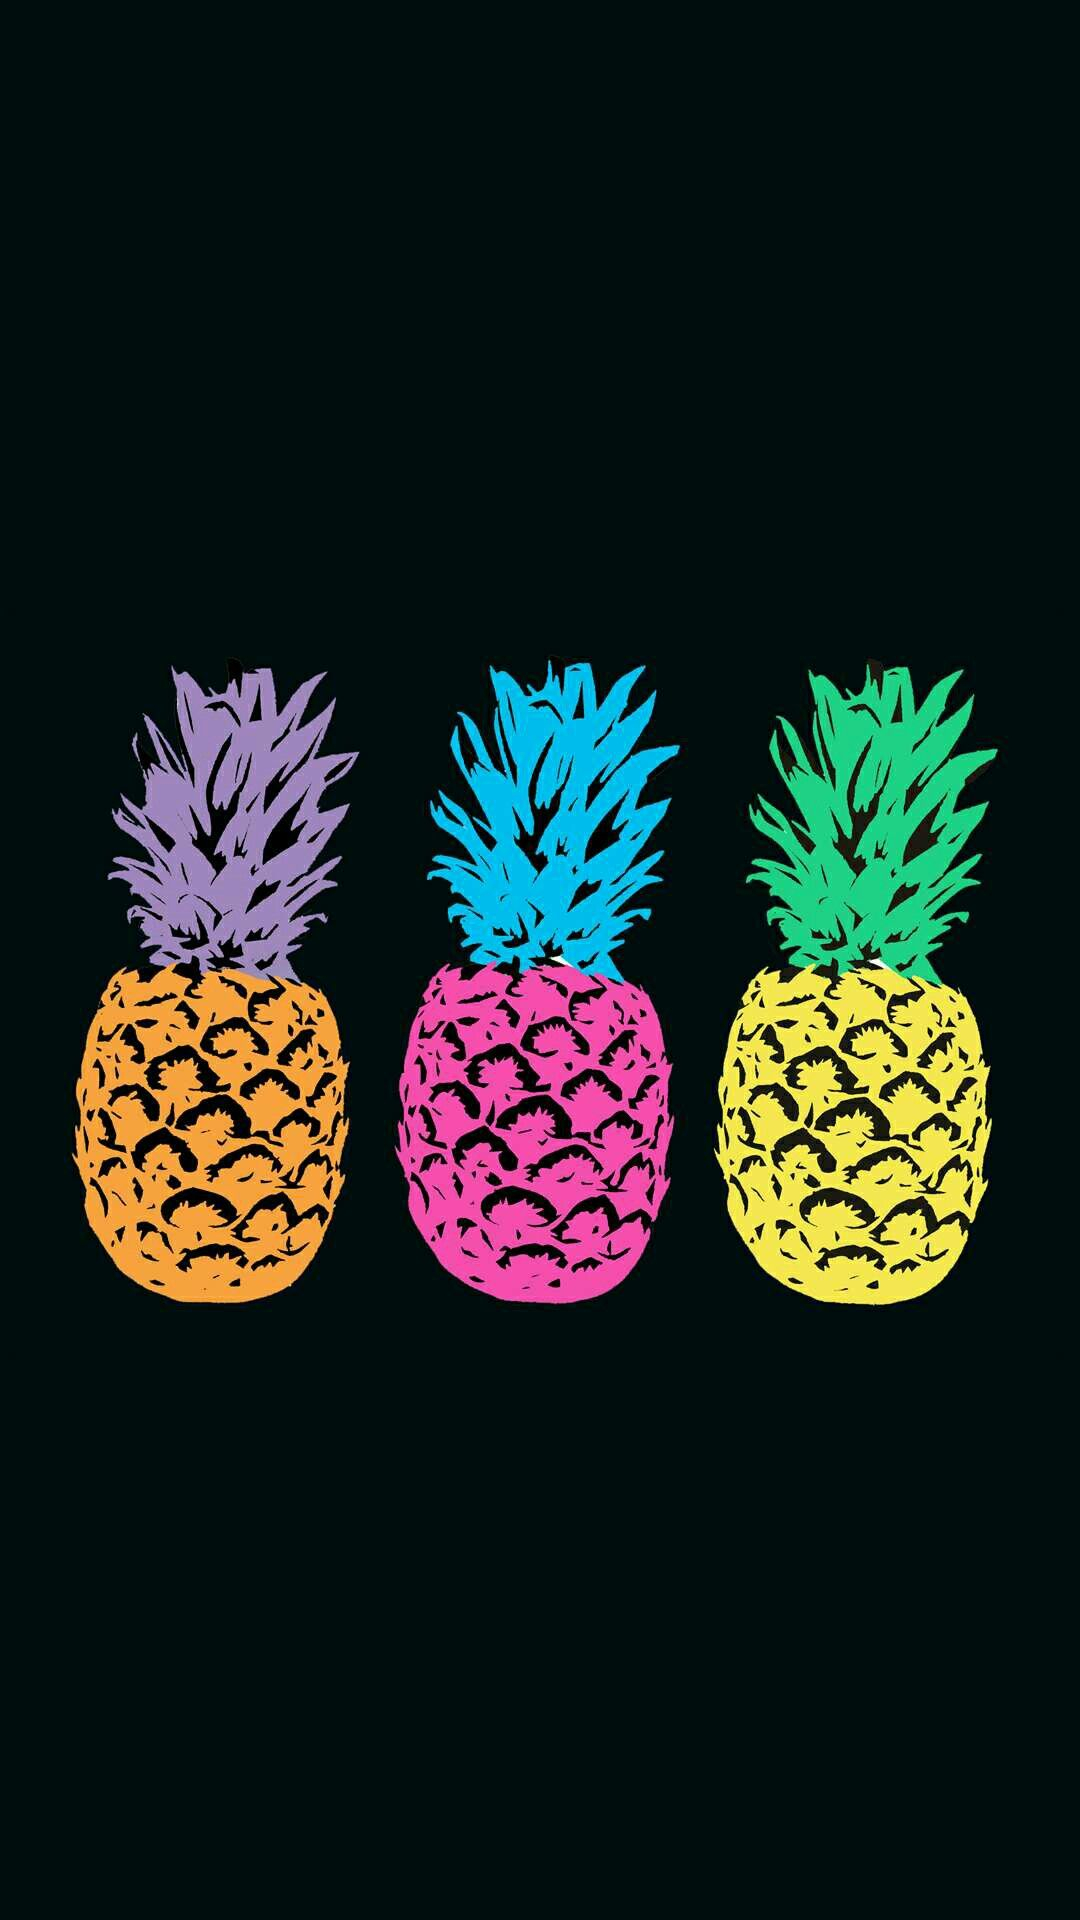 1080x1920 Pineapple neon pop art black background | Pineapple wallpaper, Pineapple backgrounds, Pop art wallpaper